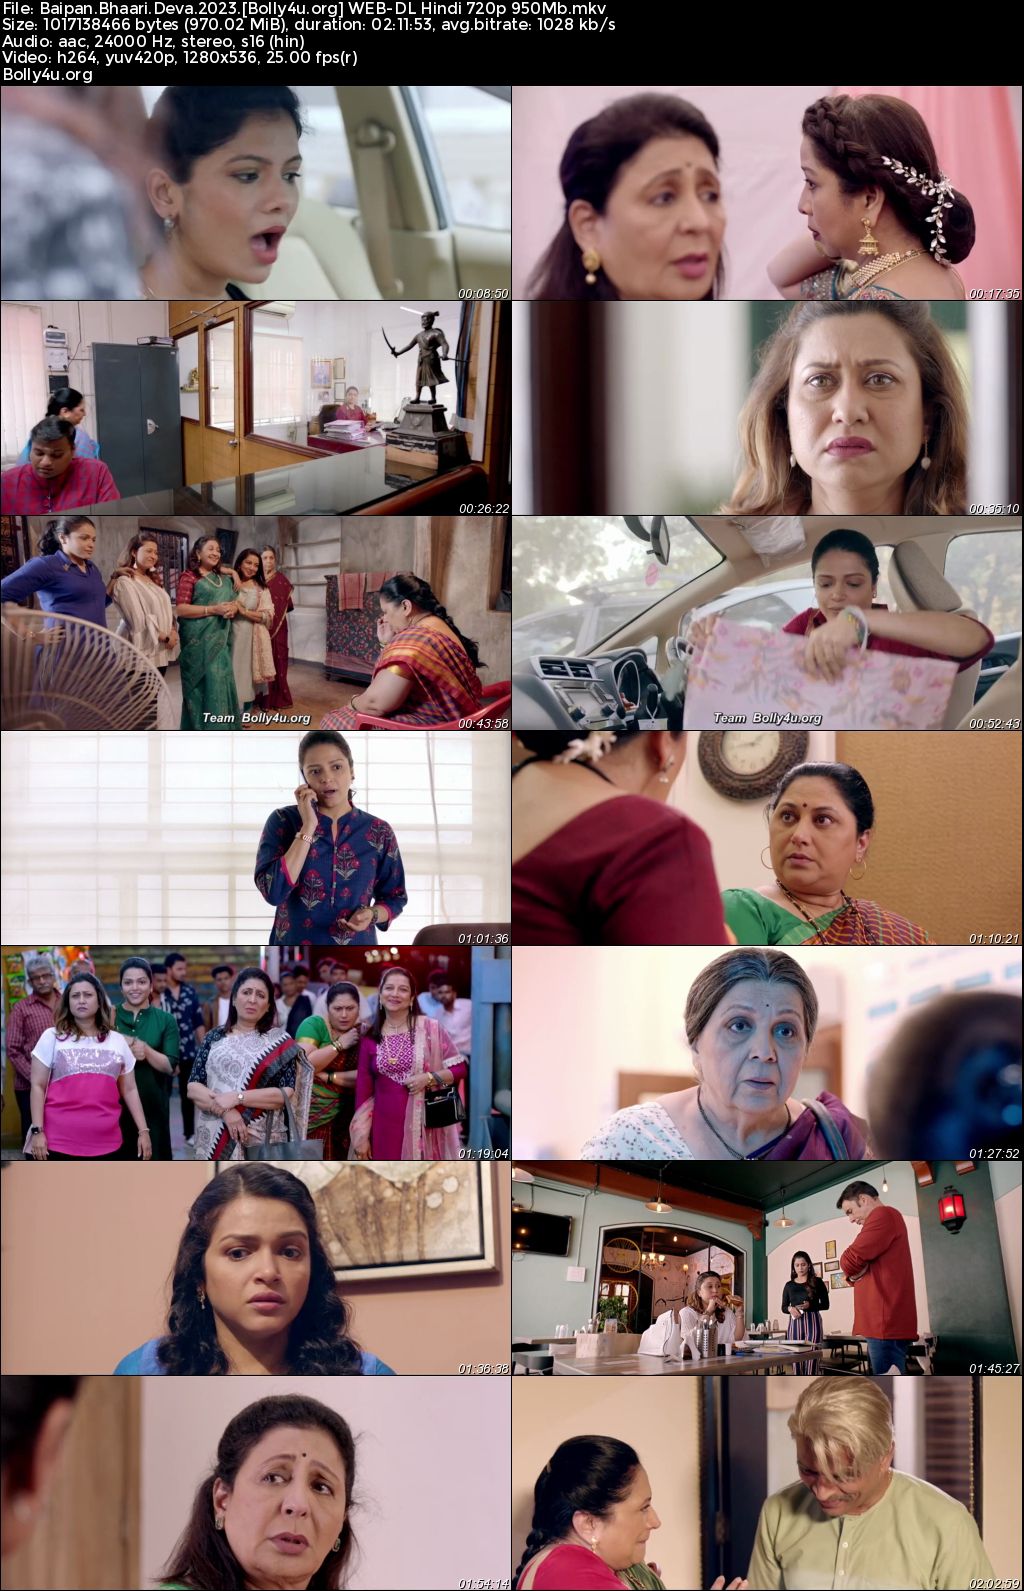 Baipan Bhaari Deva 2023 WEB-DL Hindi Full Movie Download 1080p 720p 480p